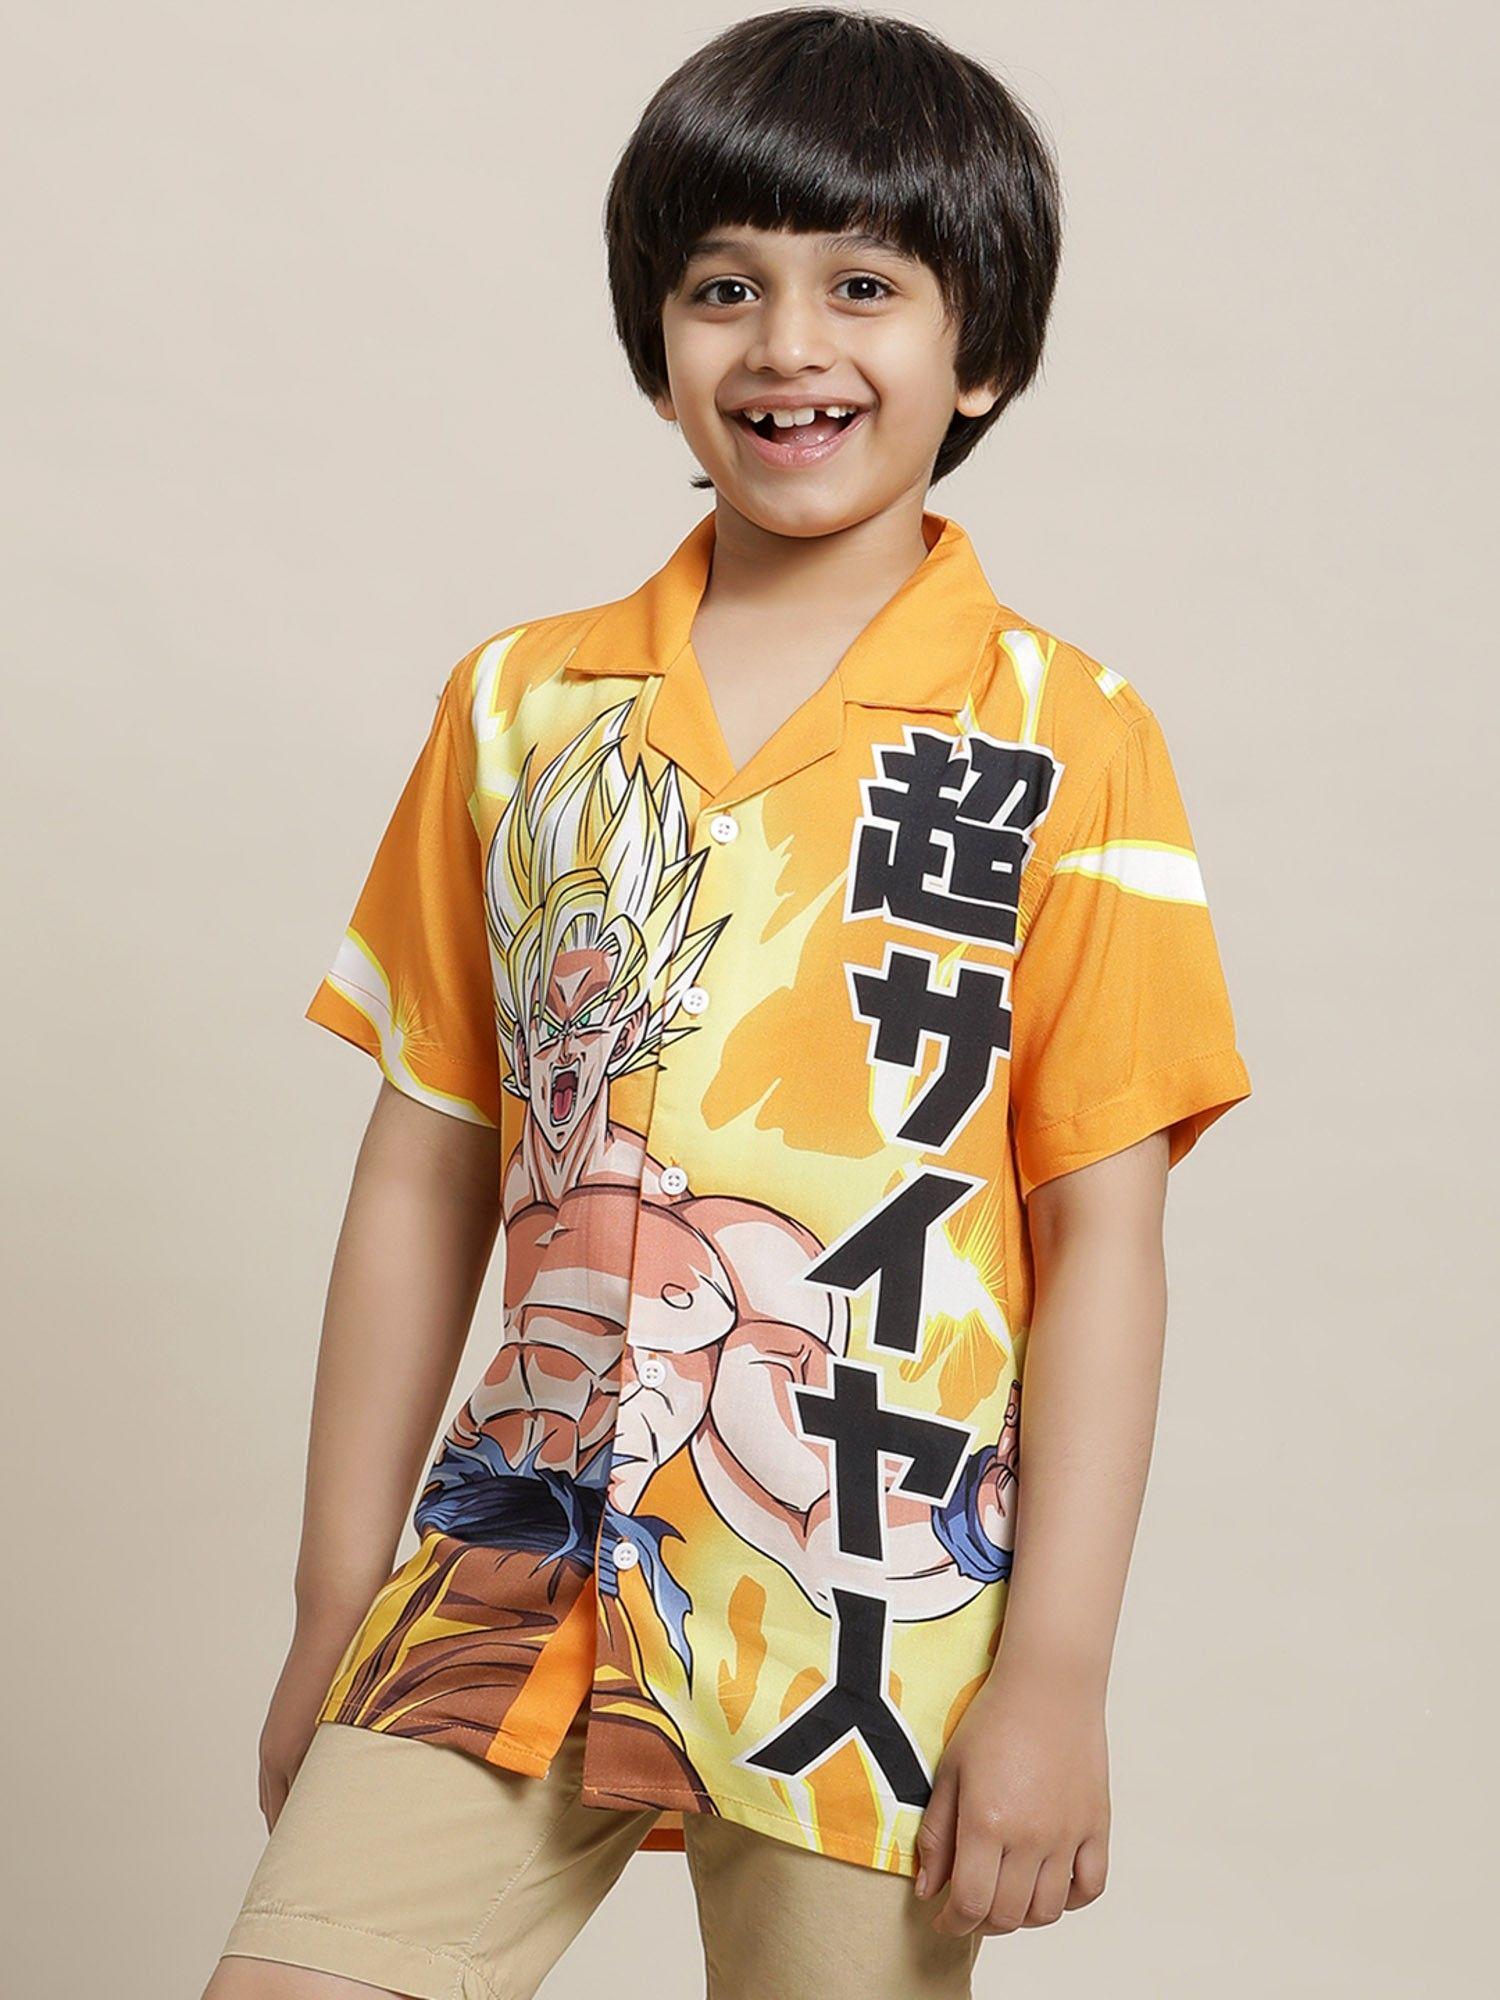 dragon ball z printed orange shirt for boys